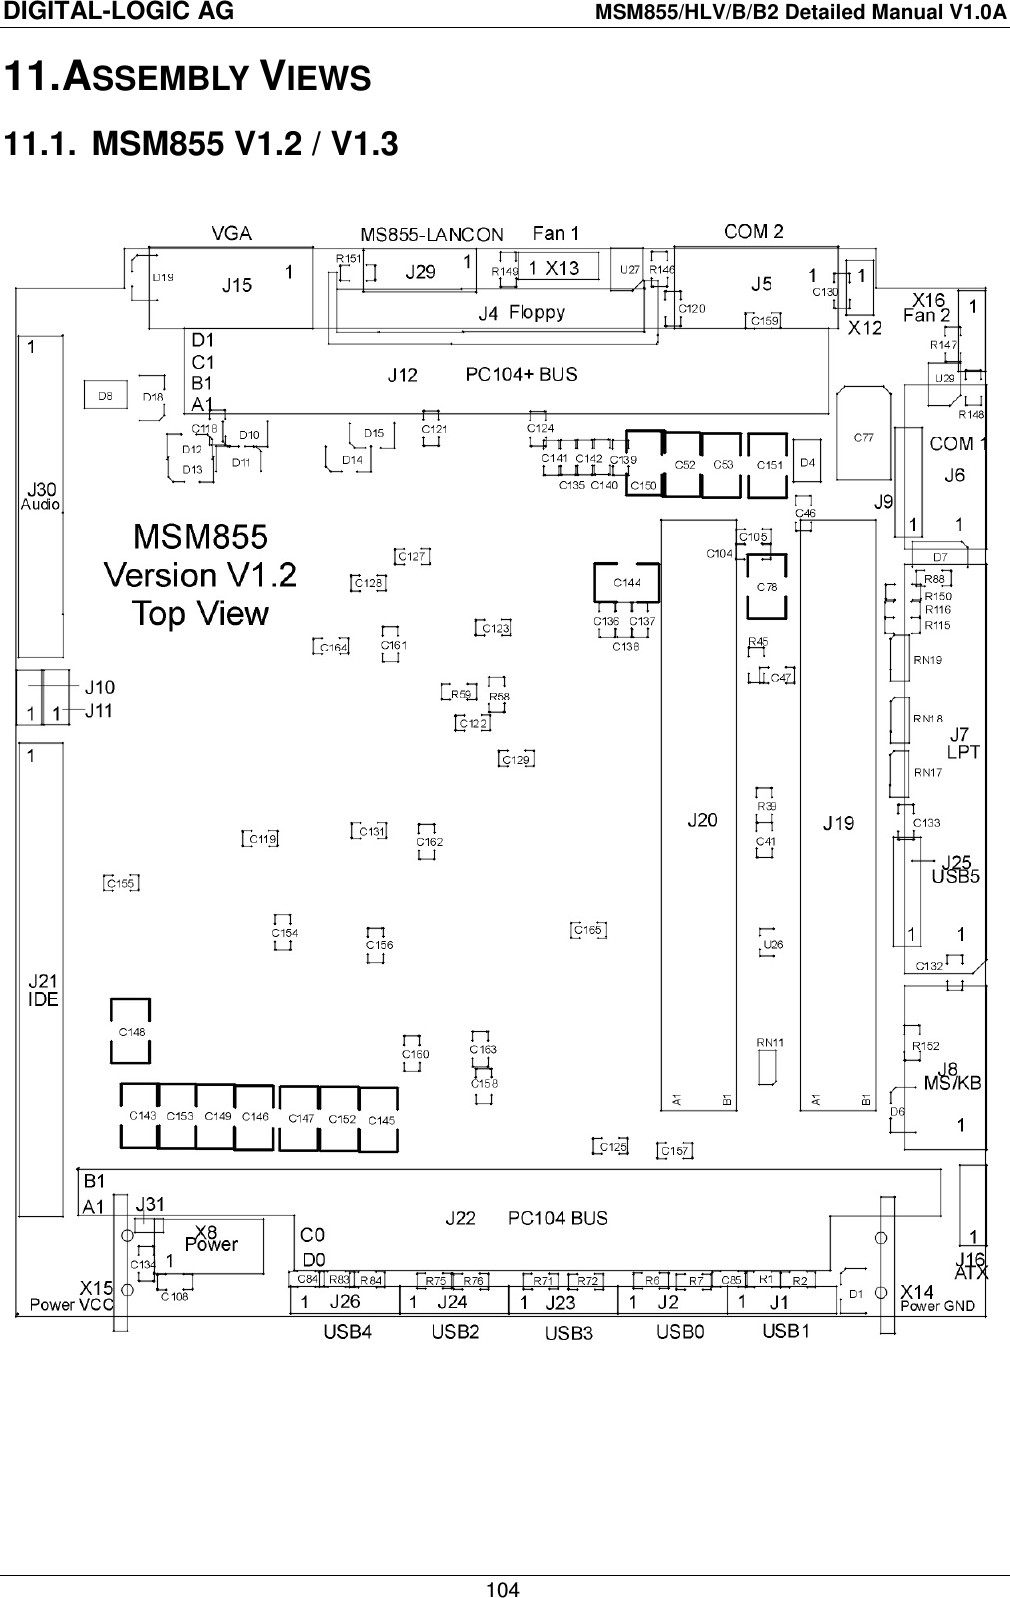 DIGITAL-LOGIC AG    MSM855/HLV/B/B2 Detailed Manual V1.0A    104 11. ASSEMBLY VIEWS 11.1.  MSM855 V1.2 / V1.3    